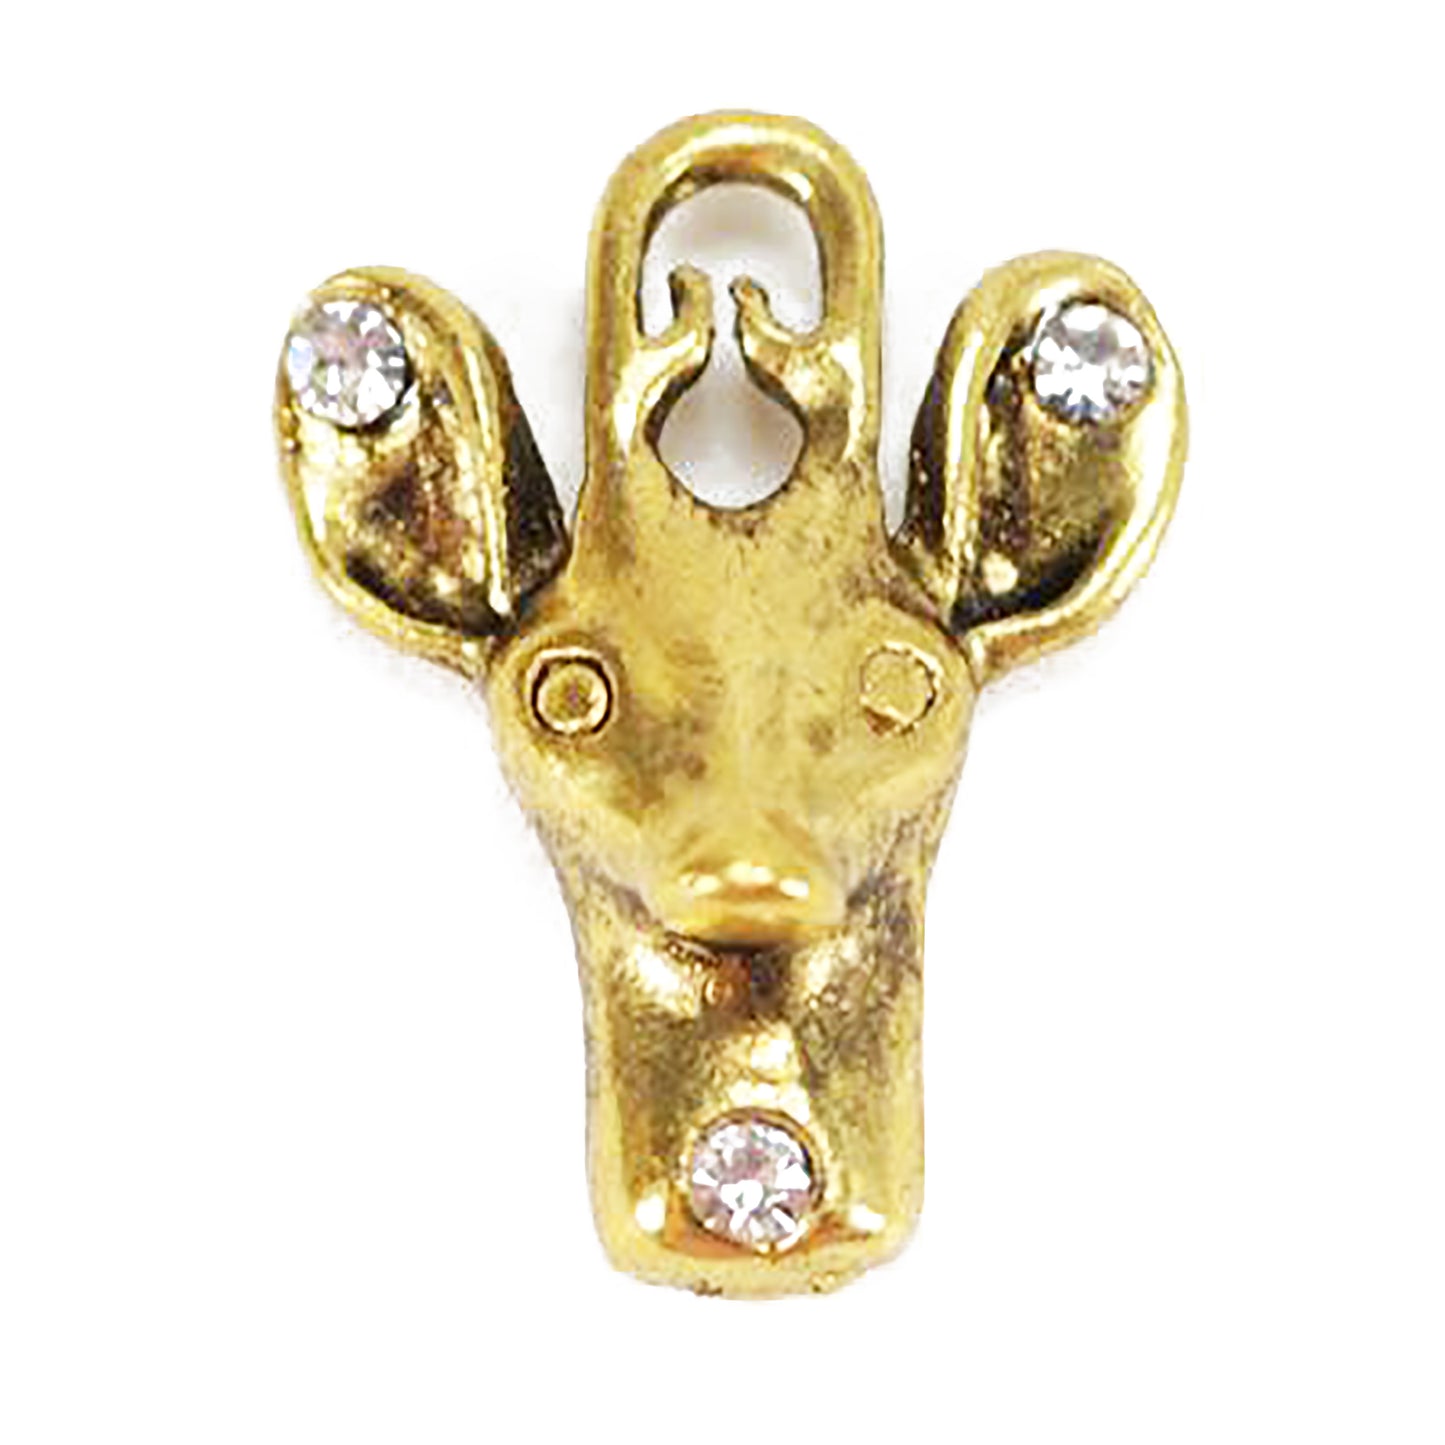 Deer head rhinestone pendant / gold colored / 20 mm